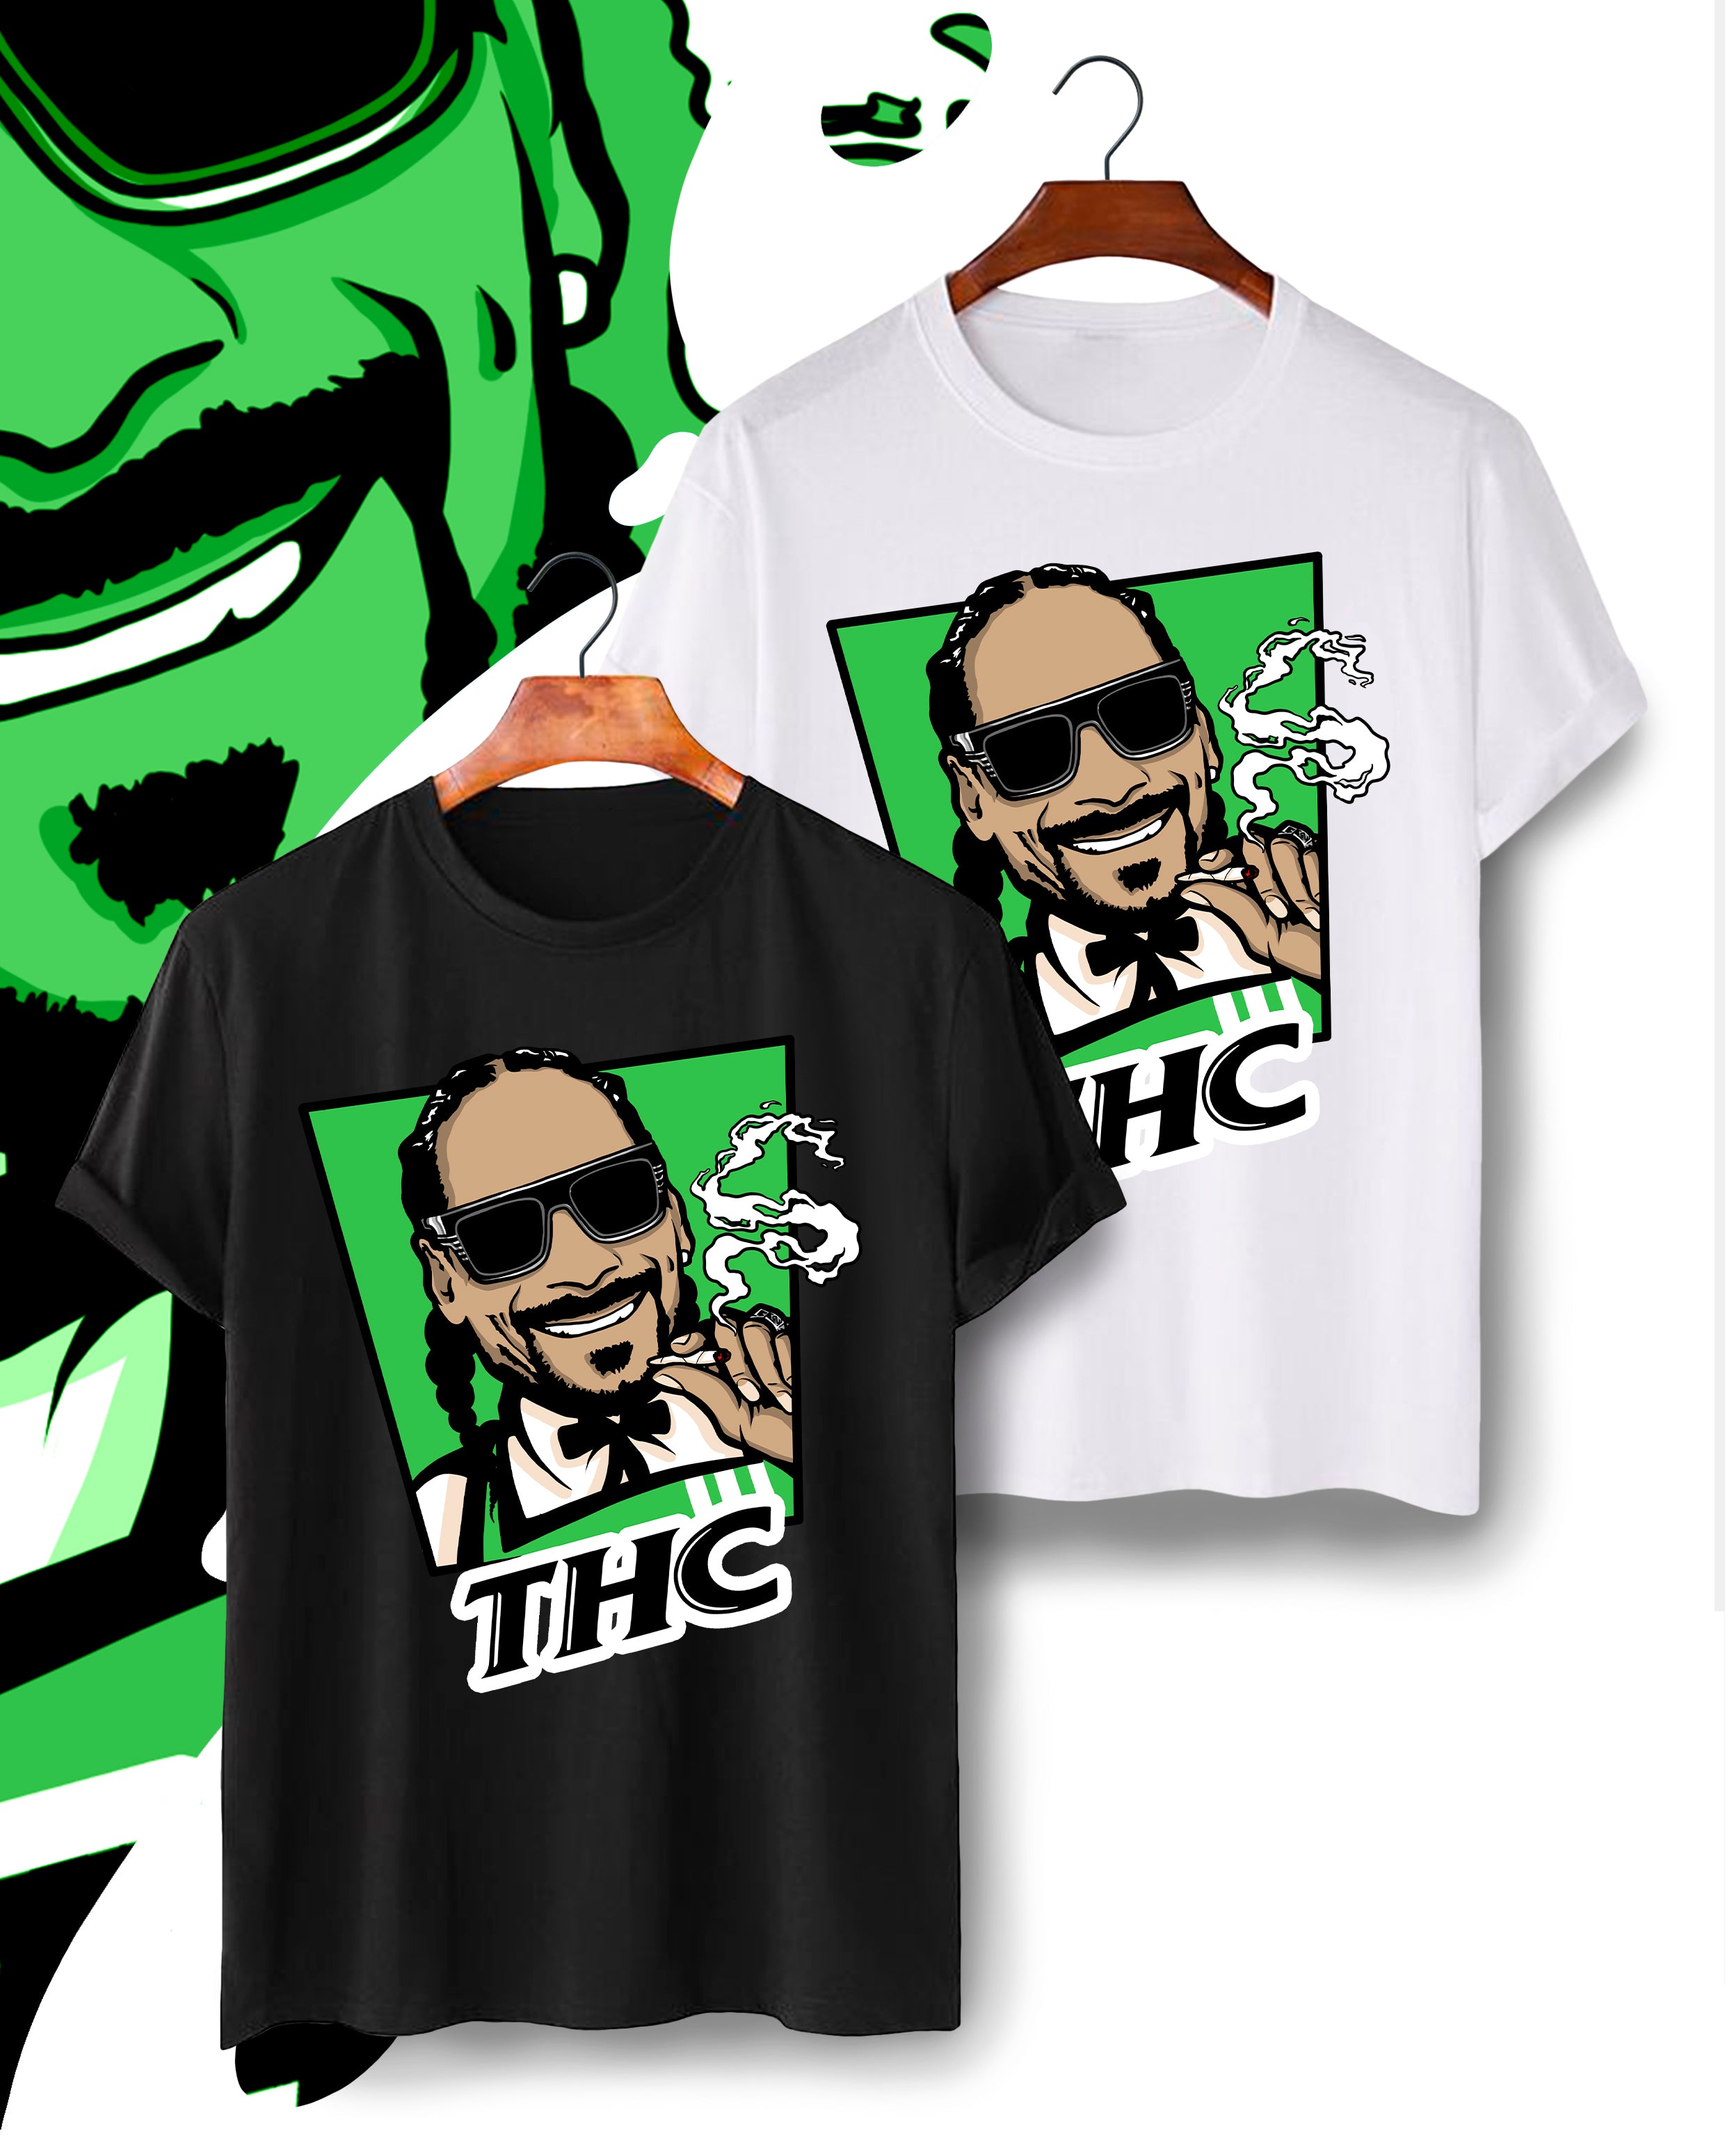 Camiseta de Snoop dog 